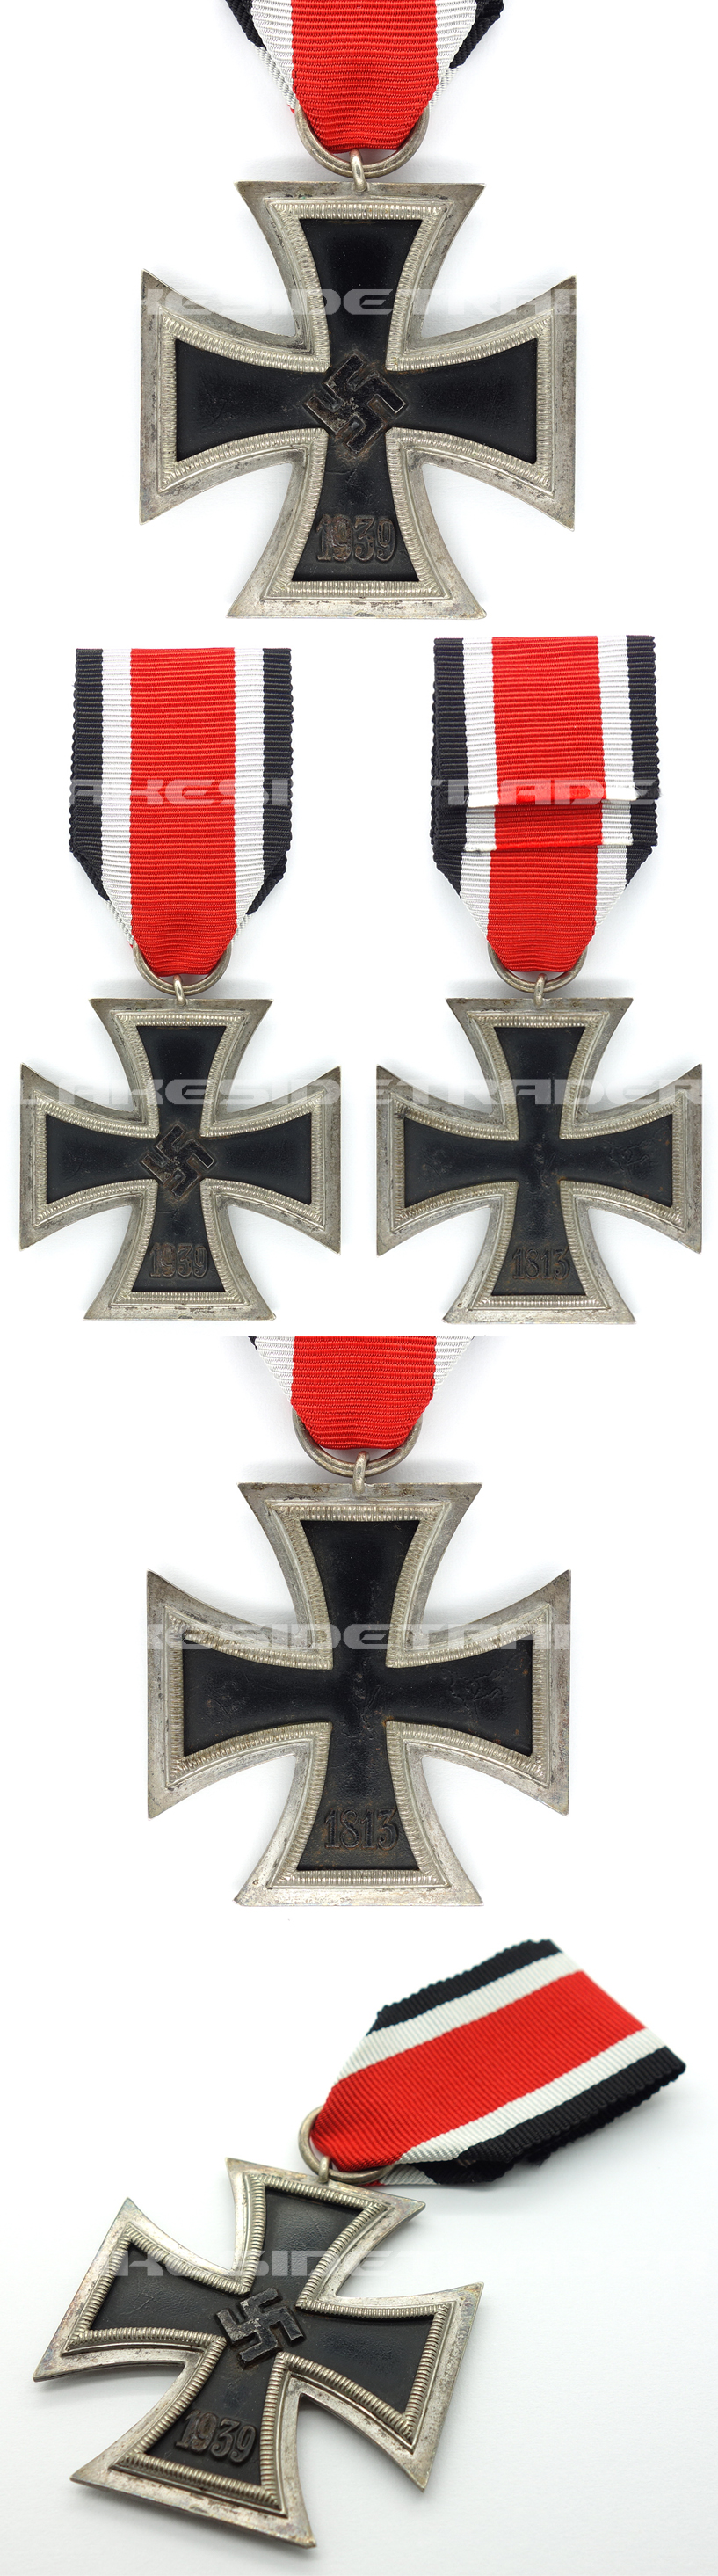 Übergrosse Knights Cross Sized - 2nd Class Iron Cross